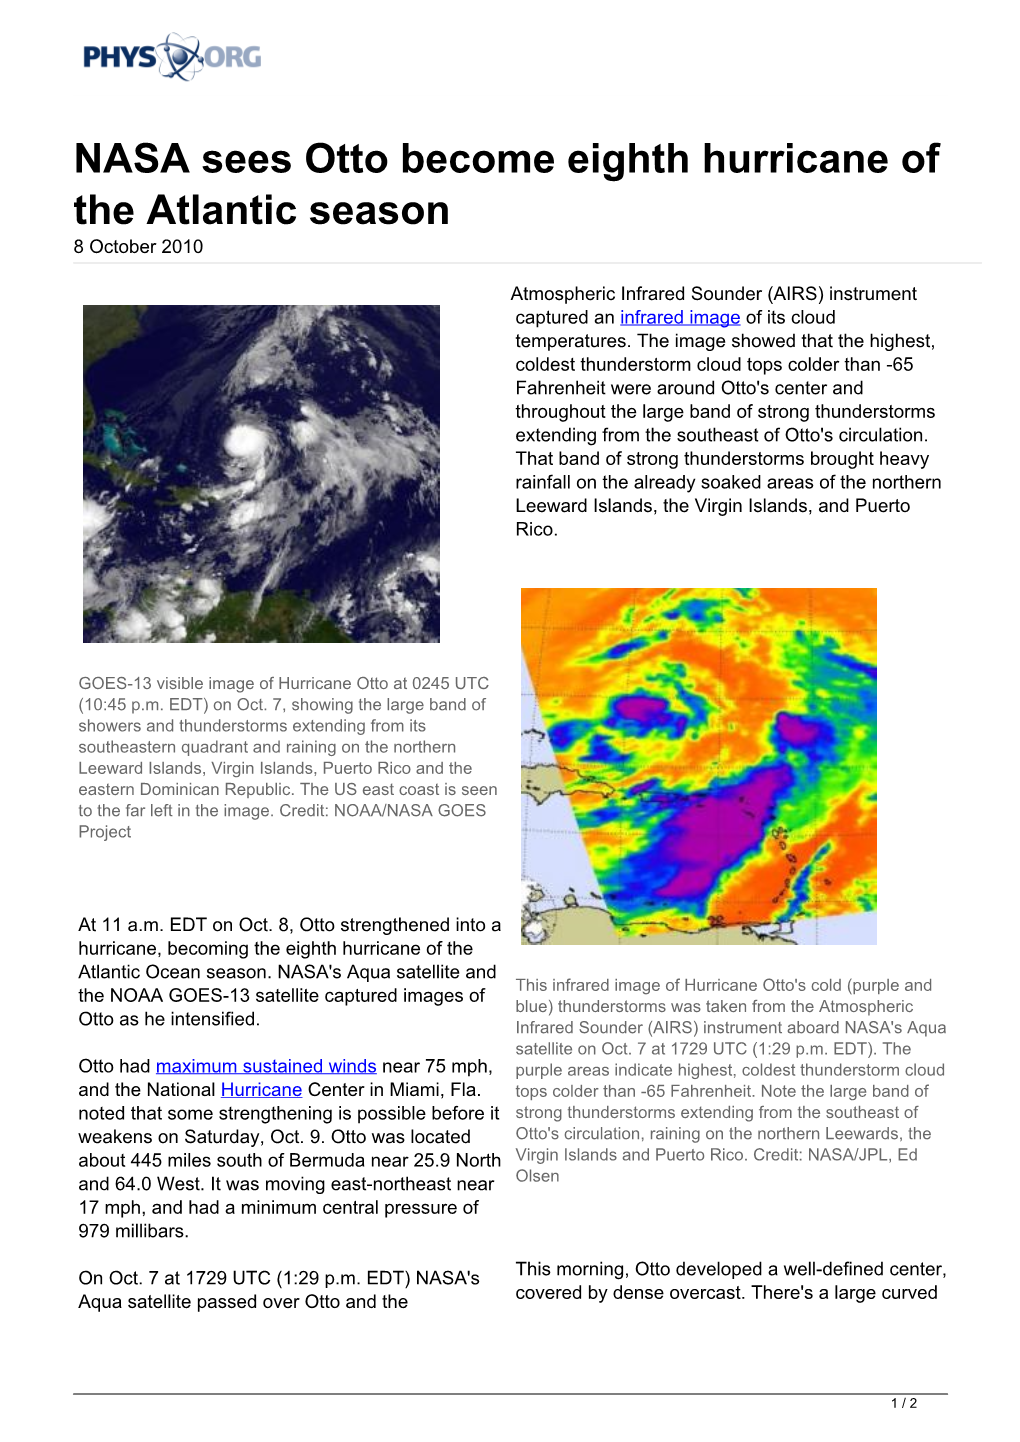 NASA Sees Otto Become Eighth Hurricane of the Atlantic Season 8 October 2010